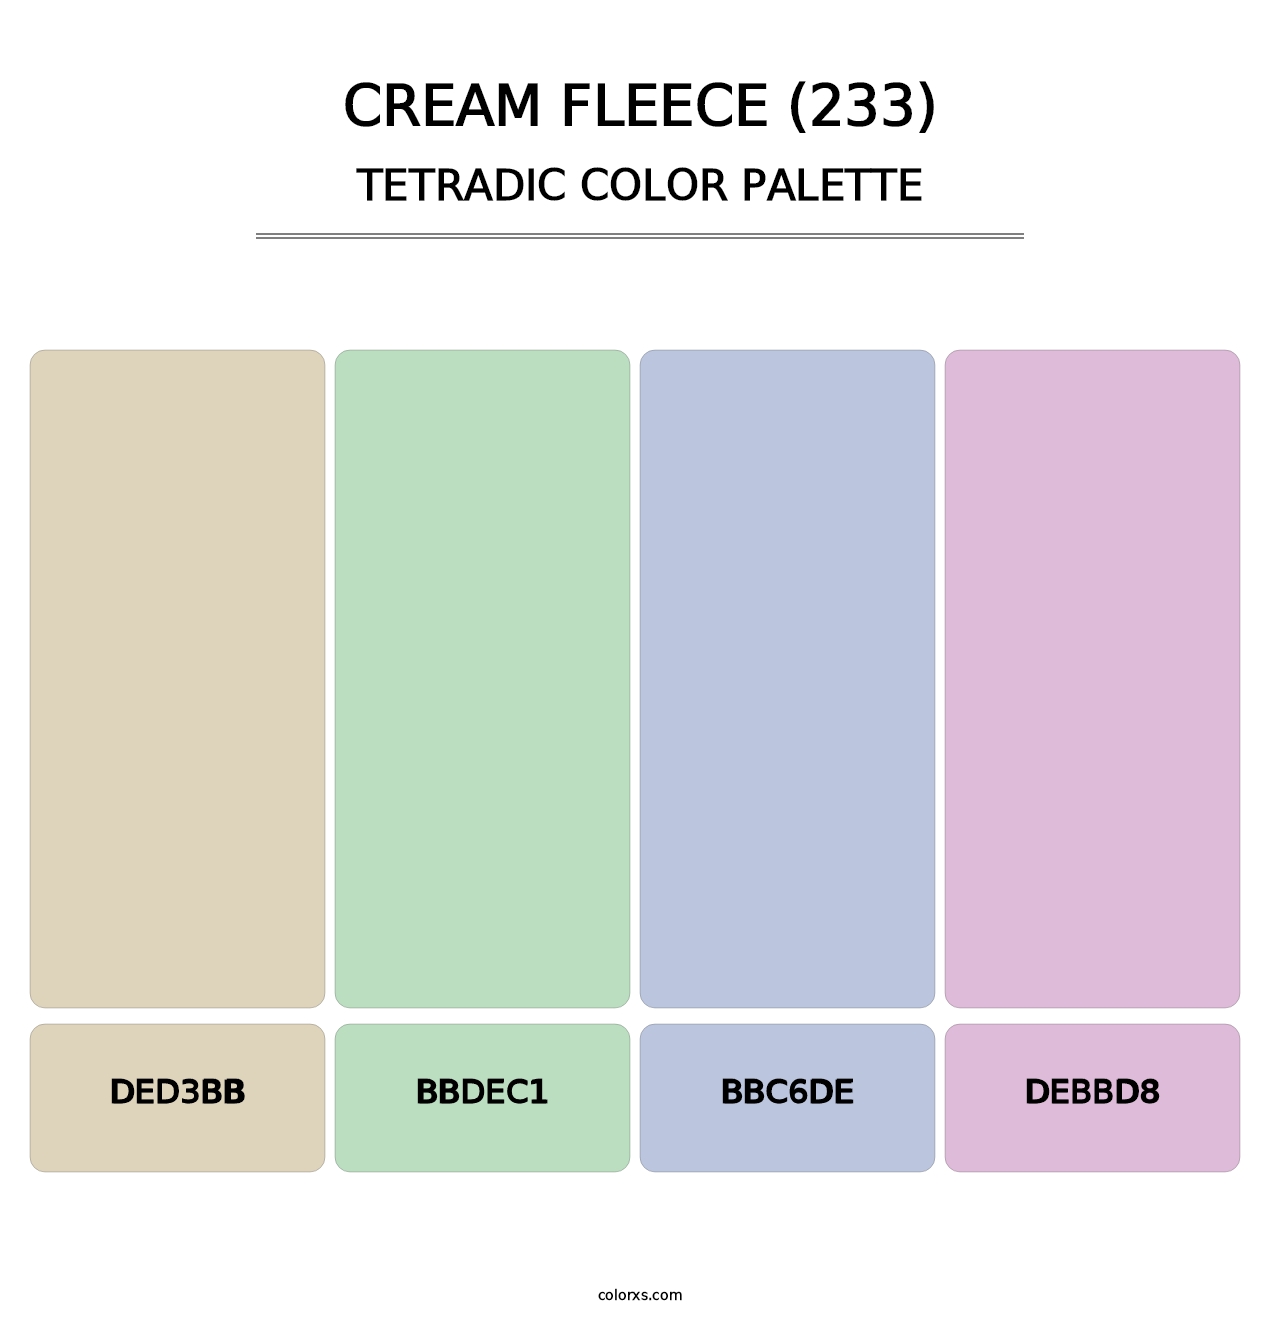 Cream Fleece (233) - Tetradic Color Palette